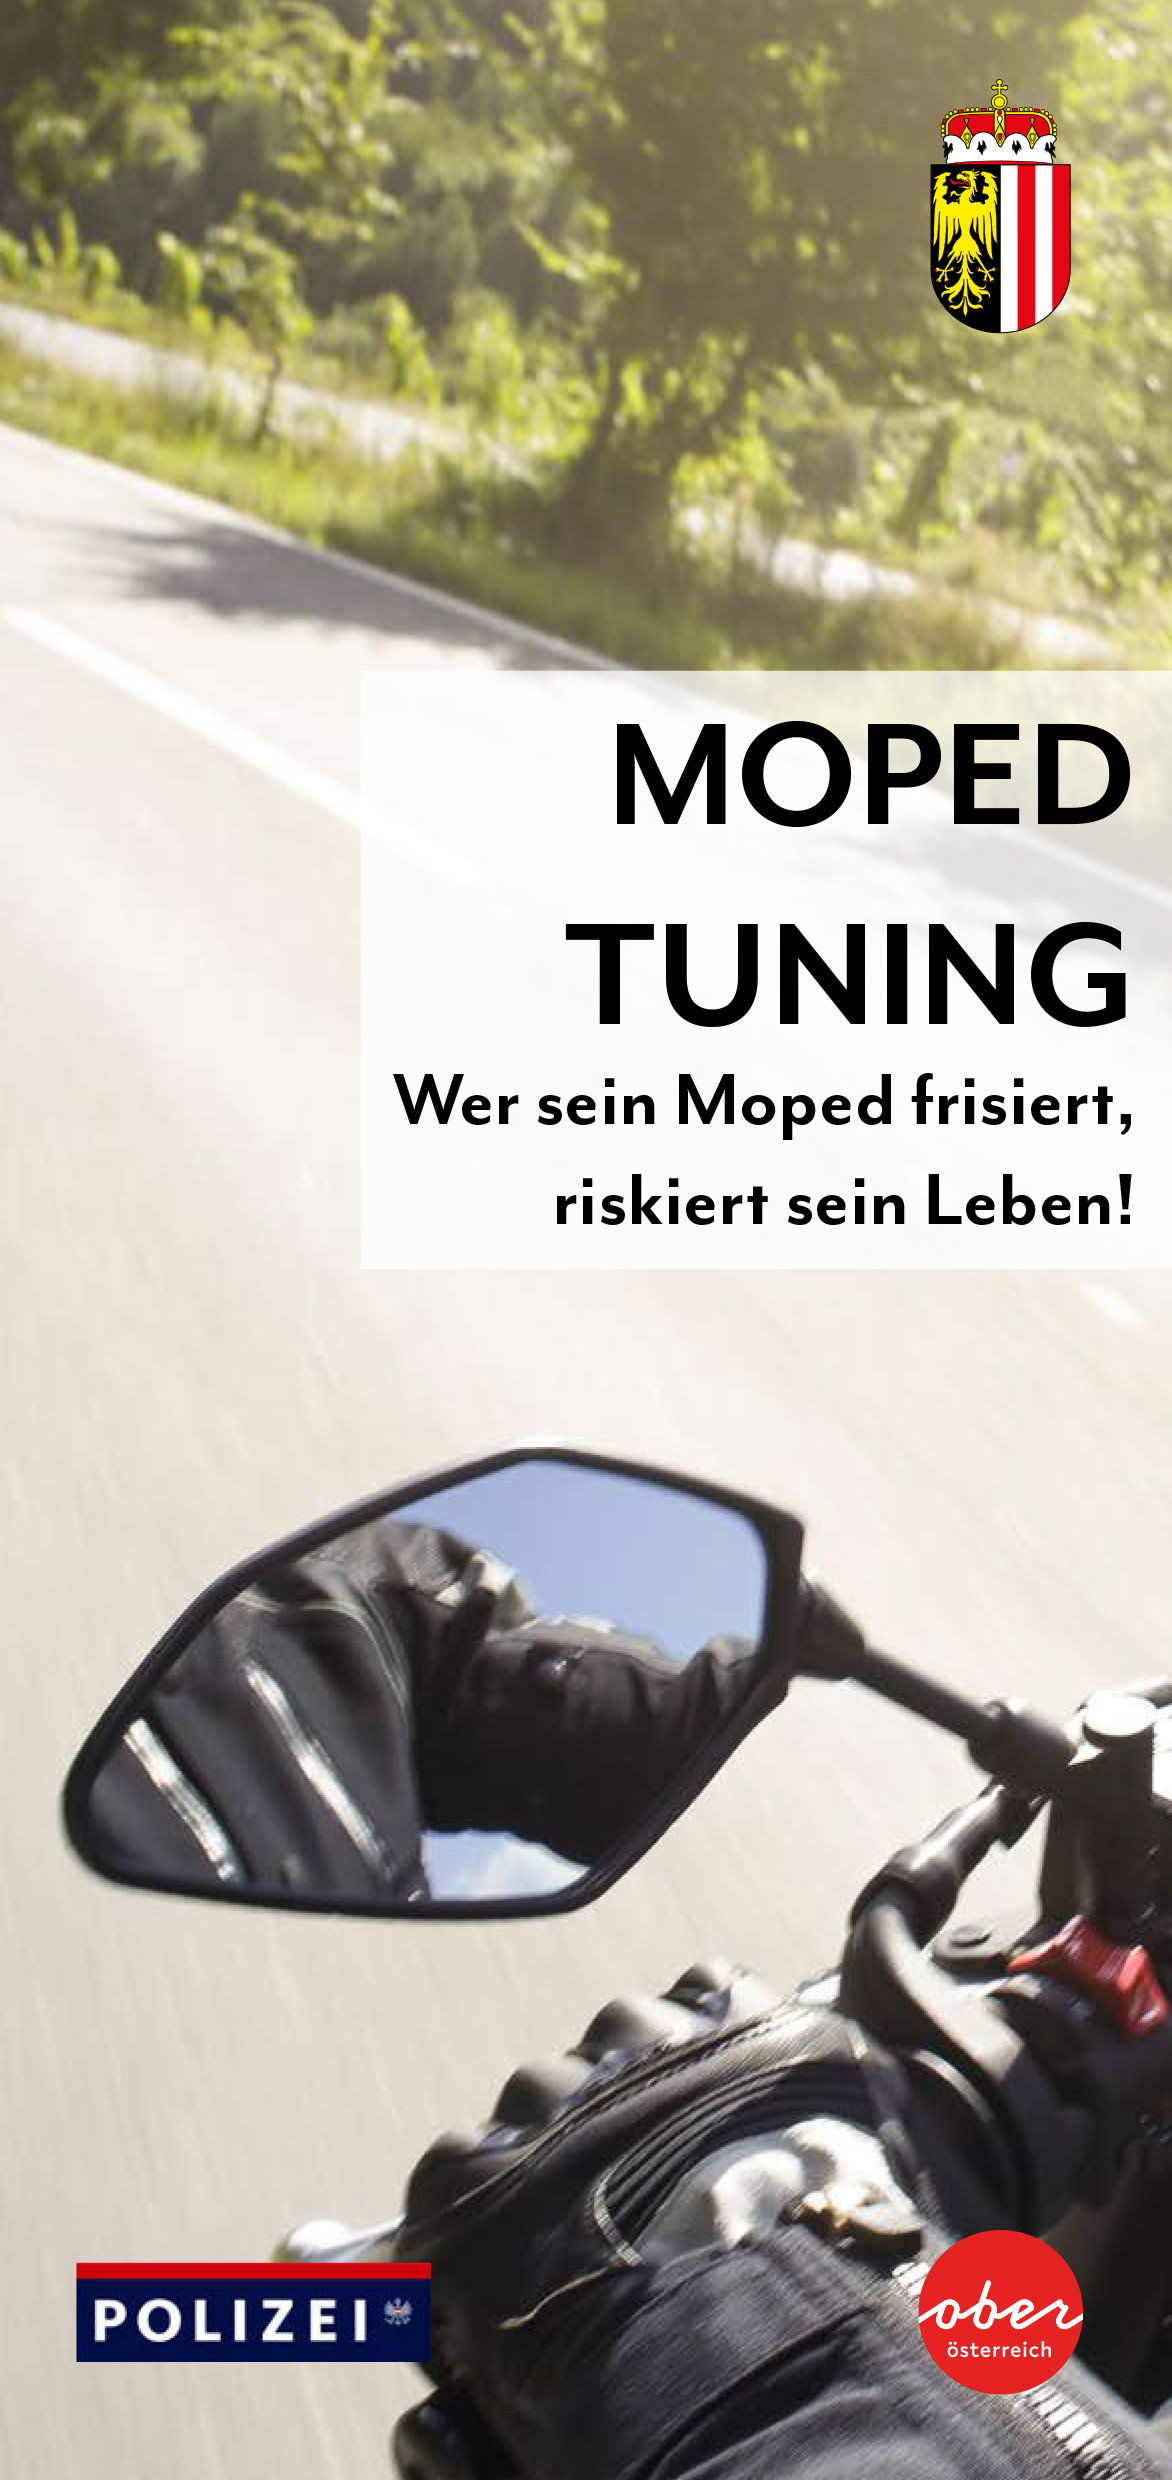 Moped Tuning - Wer sein Moped frisiert, riskiert sein Leben